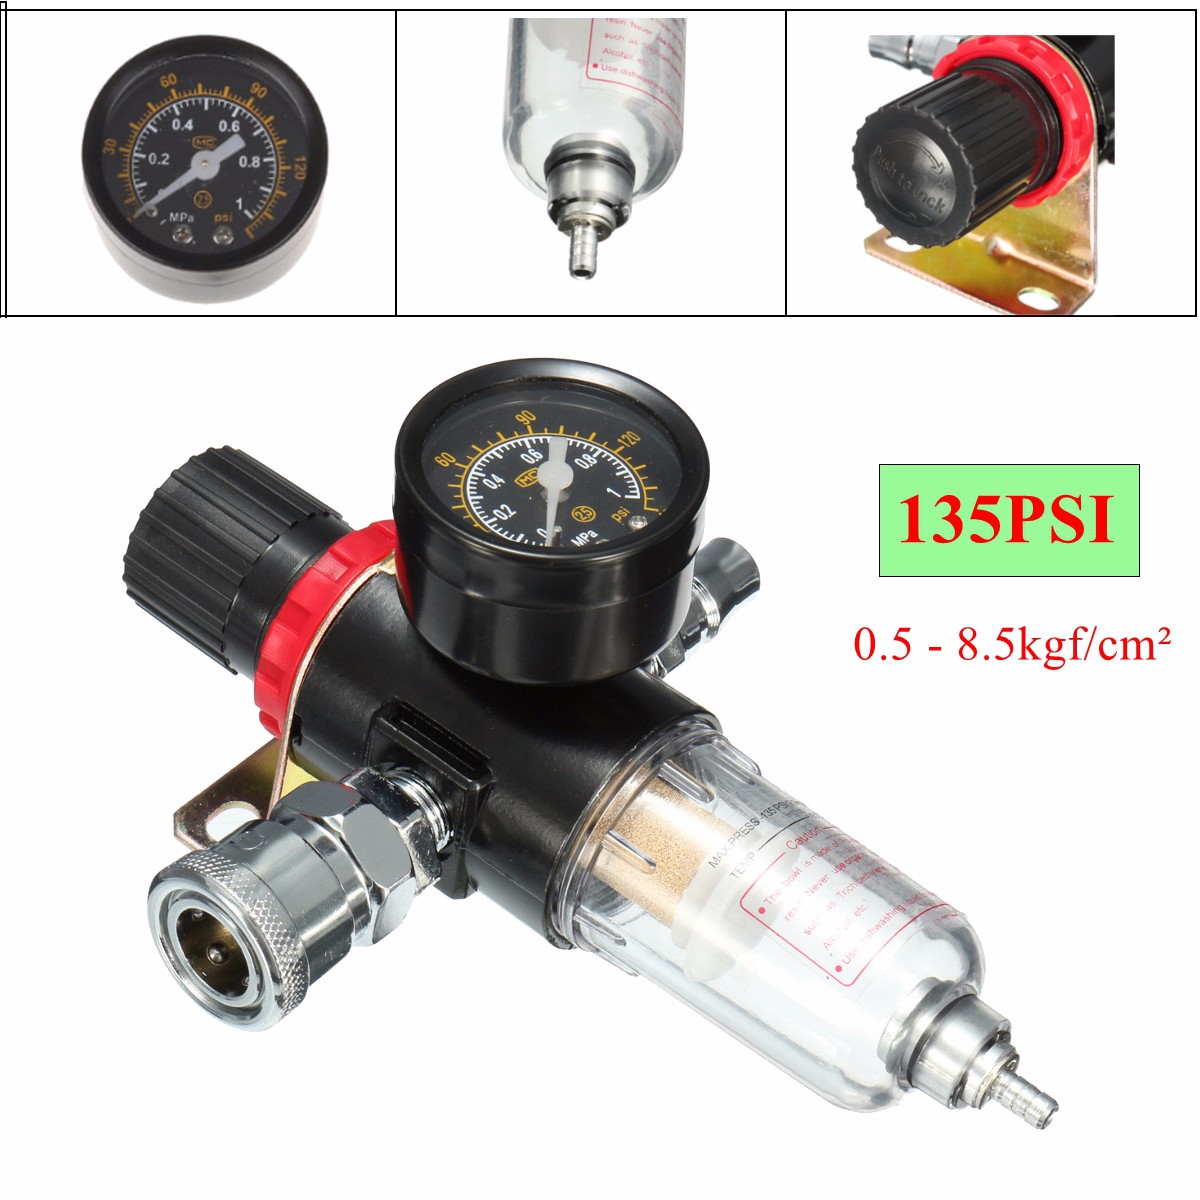 14-inch-Air-Compressor-Regulator-Pressure-Gauge-Moisture-Filter-Device-1119731-1